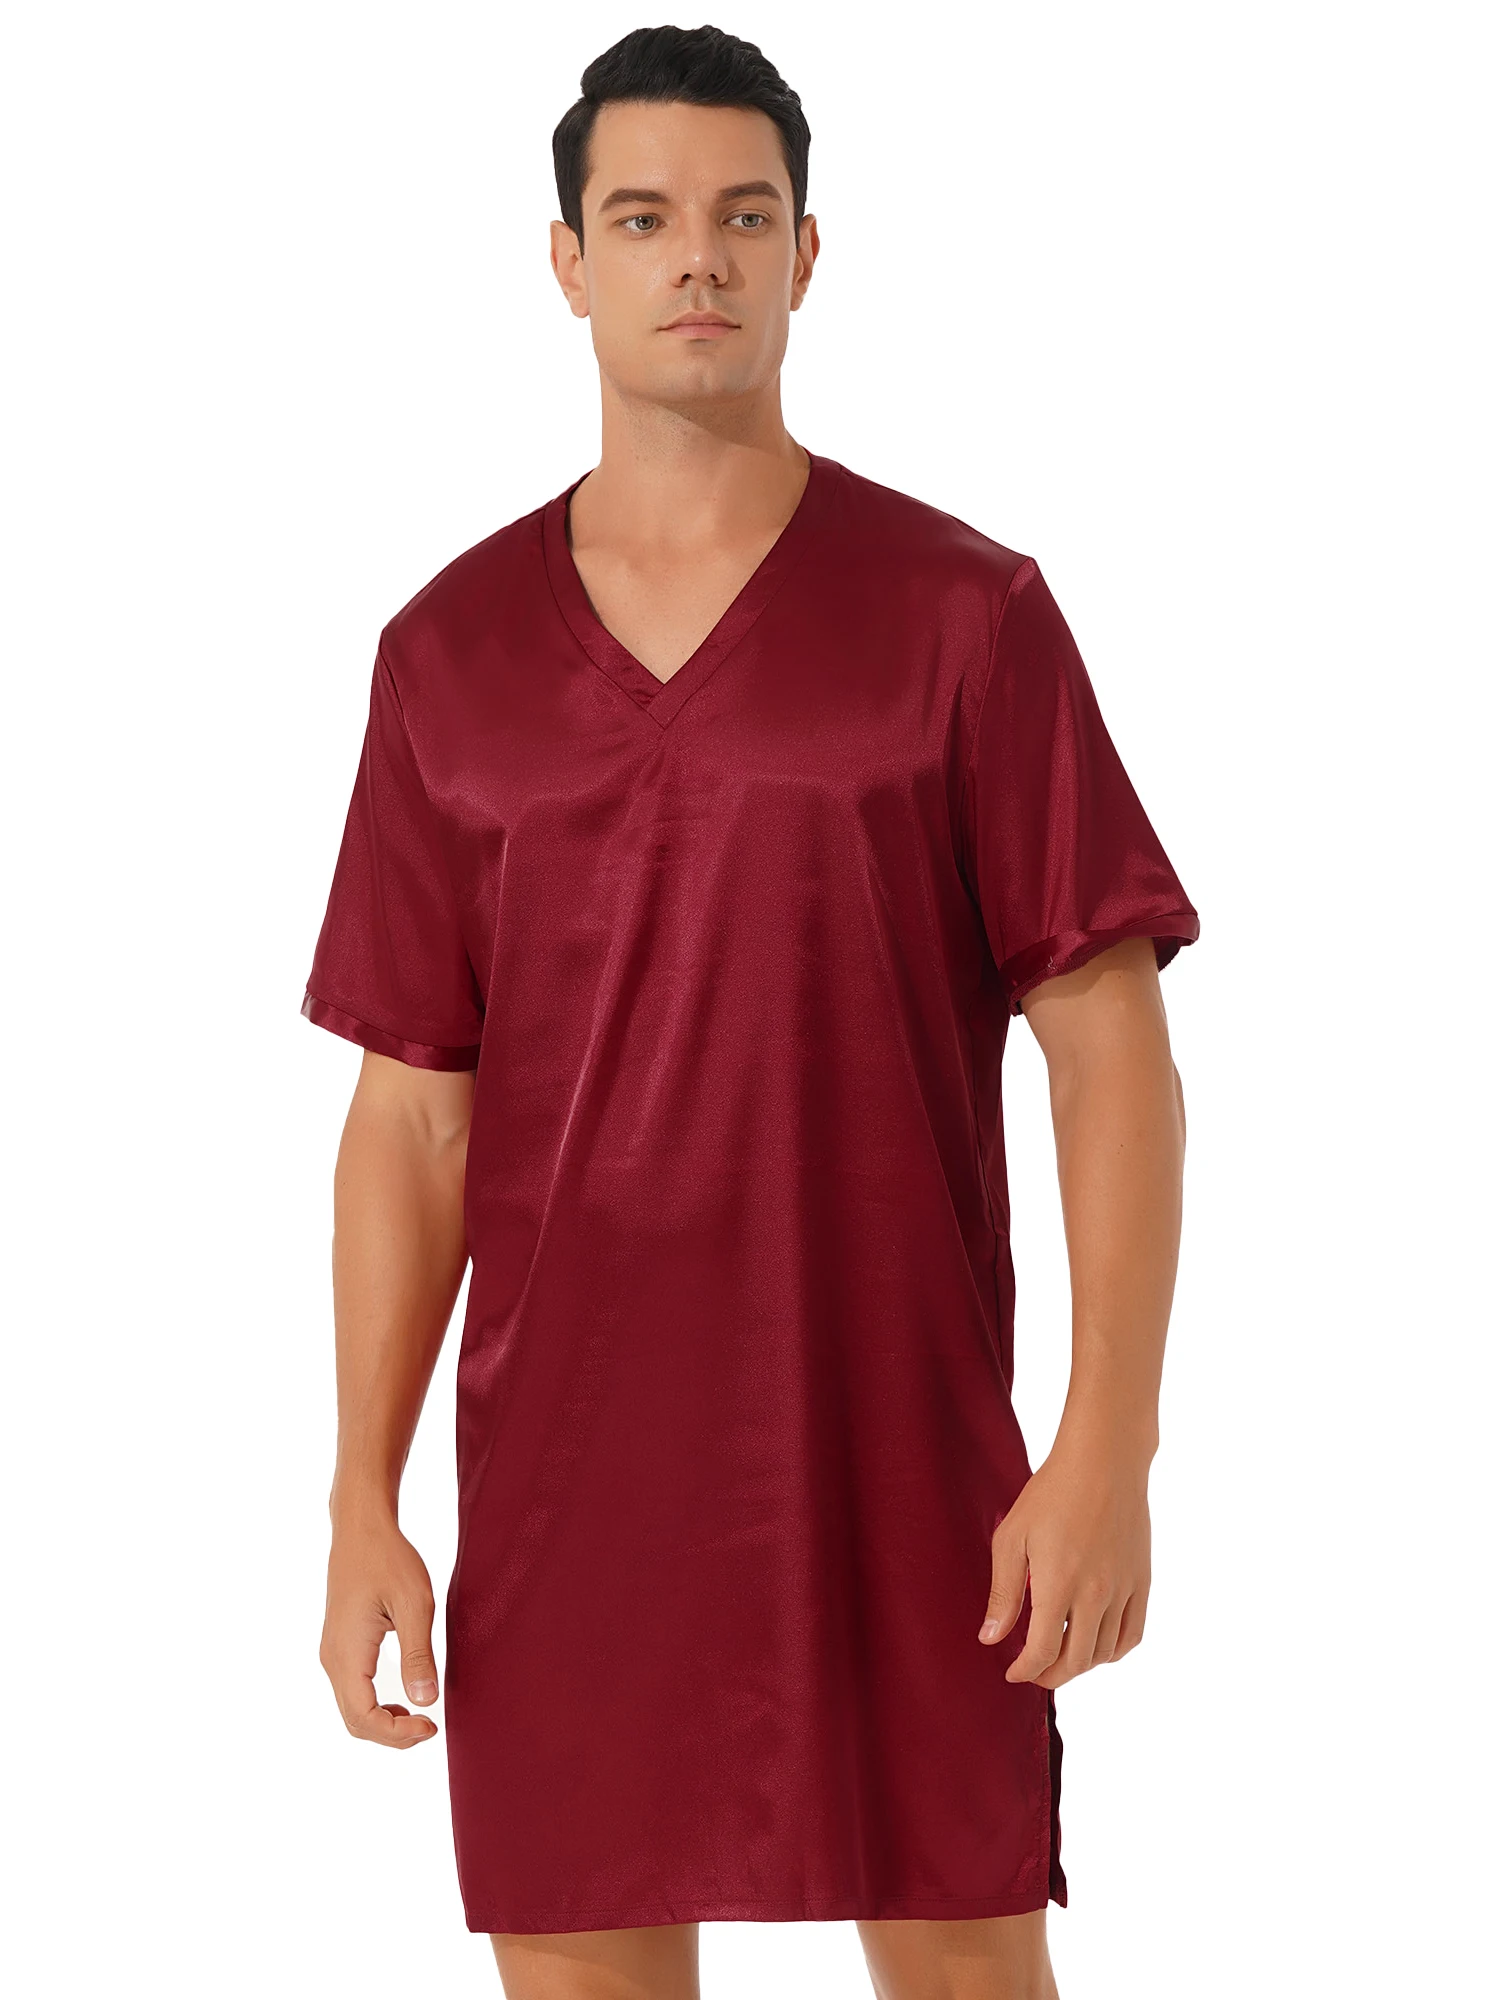 Men Women Satin Nightgown Robes V Neck Short Sleeve Sleepwear Nightclothes Homewear Sides Split Nightwear Sissy Comfort Dress mens designer pjs